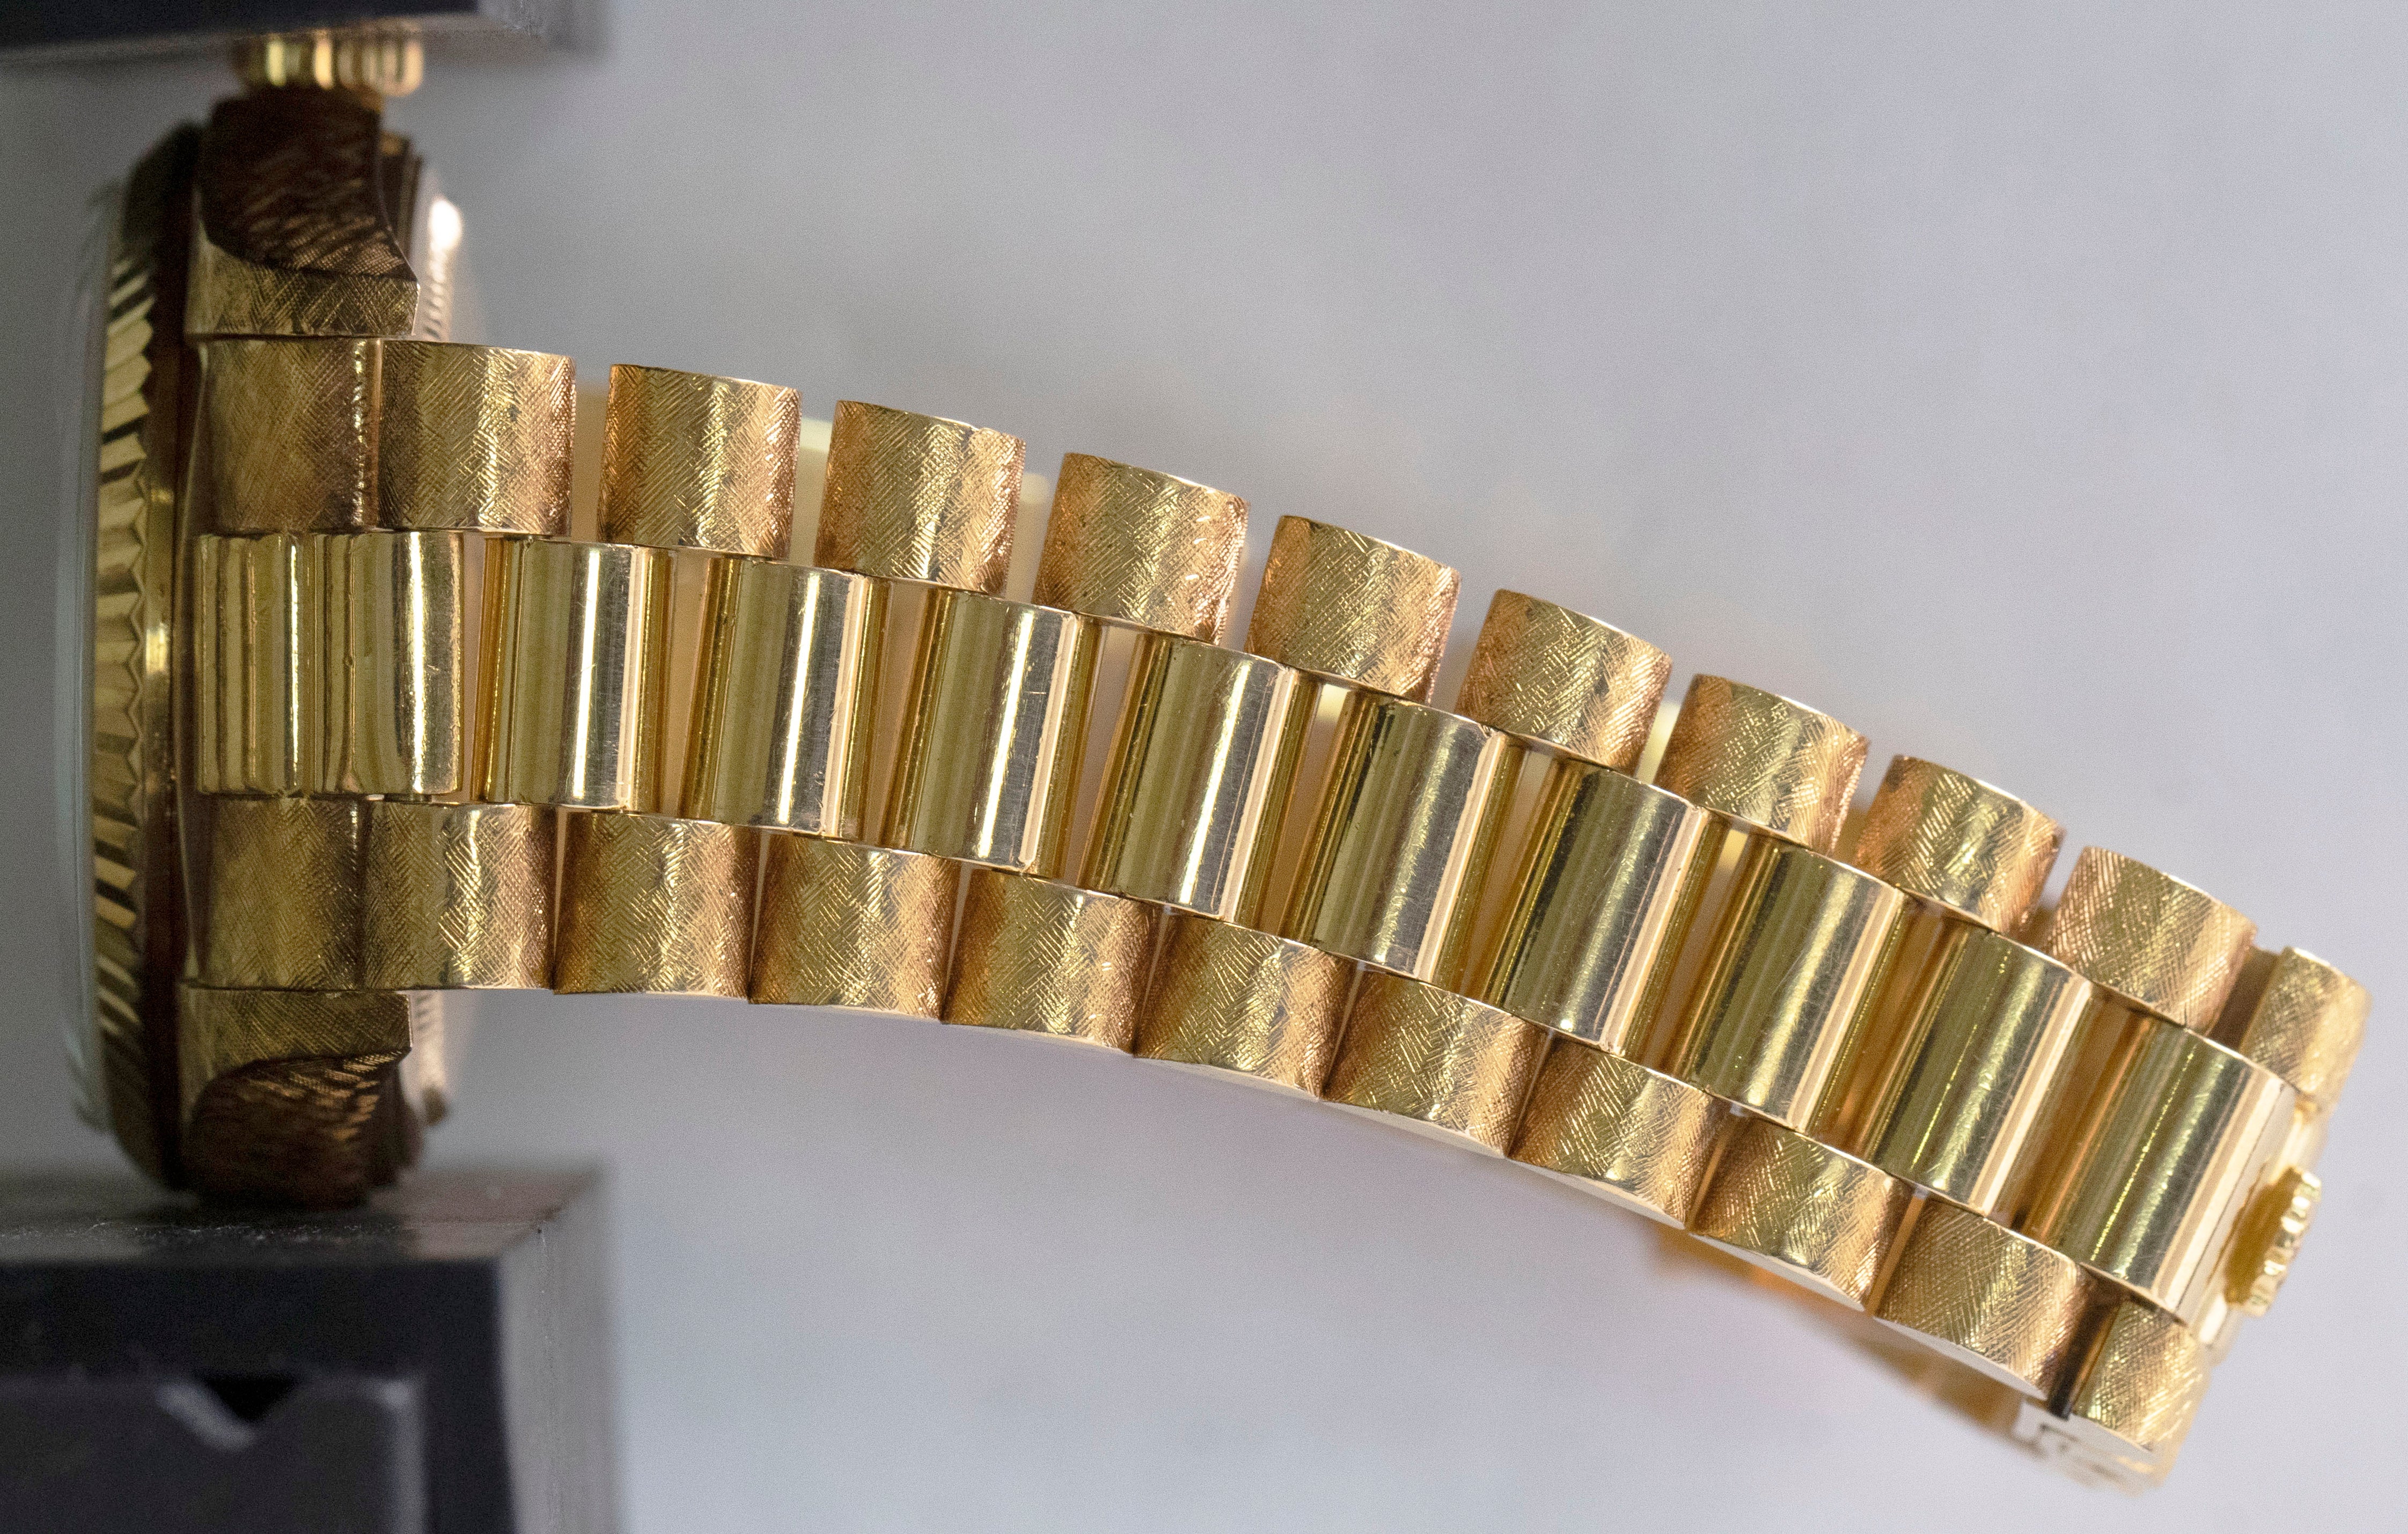 Rolex Day-Date President Florentine 36mm Silver 18K Gold Fluted Watch 18038